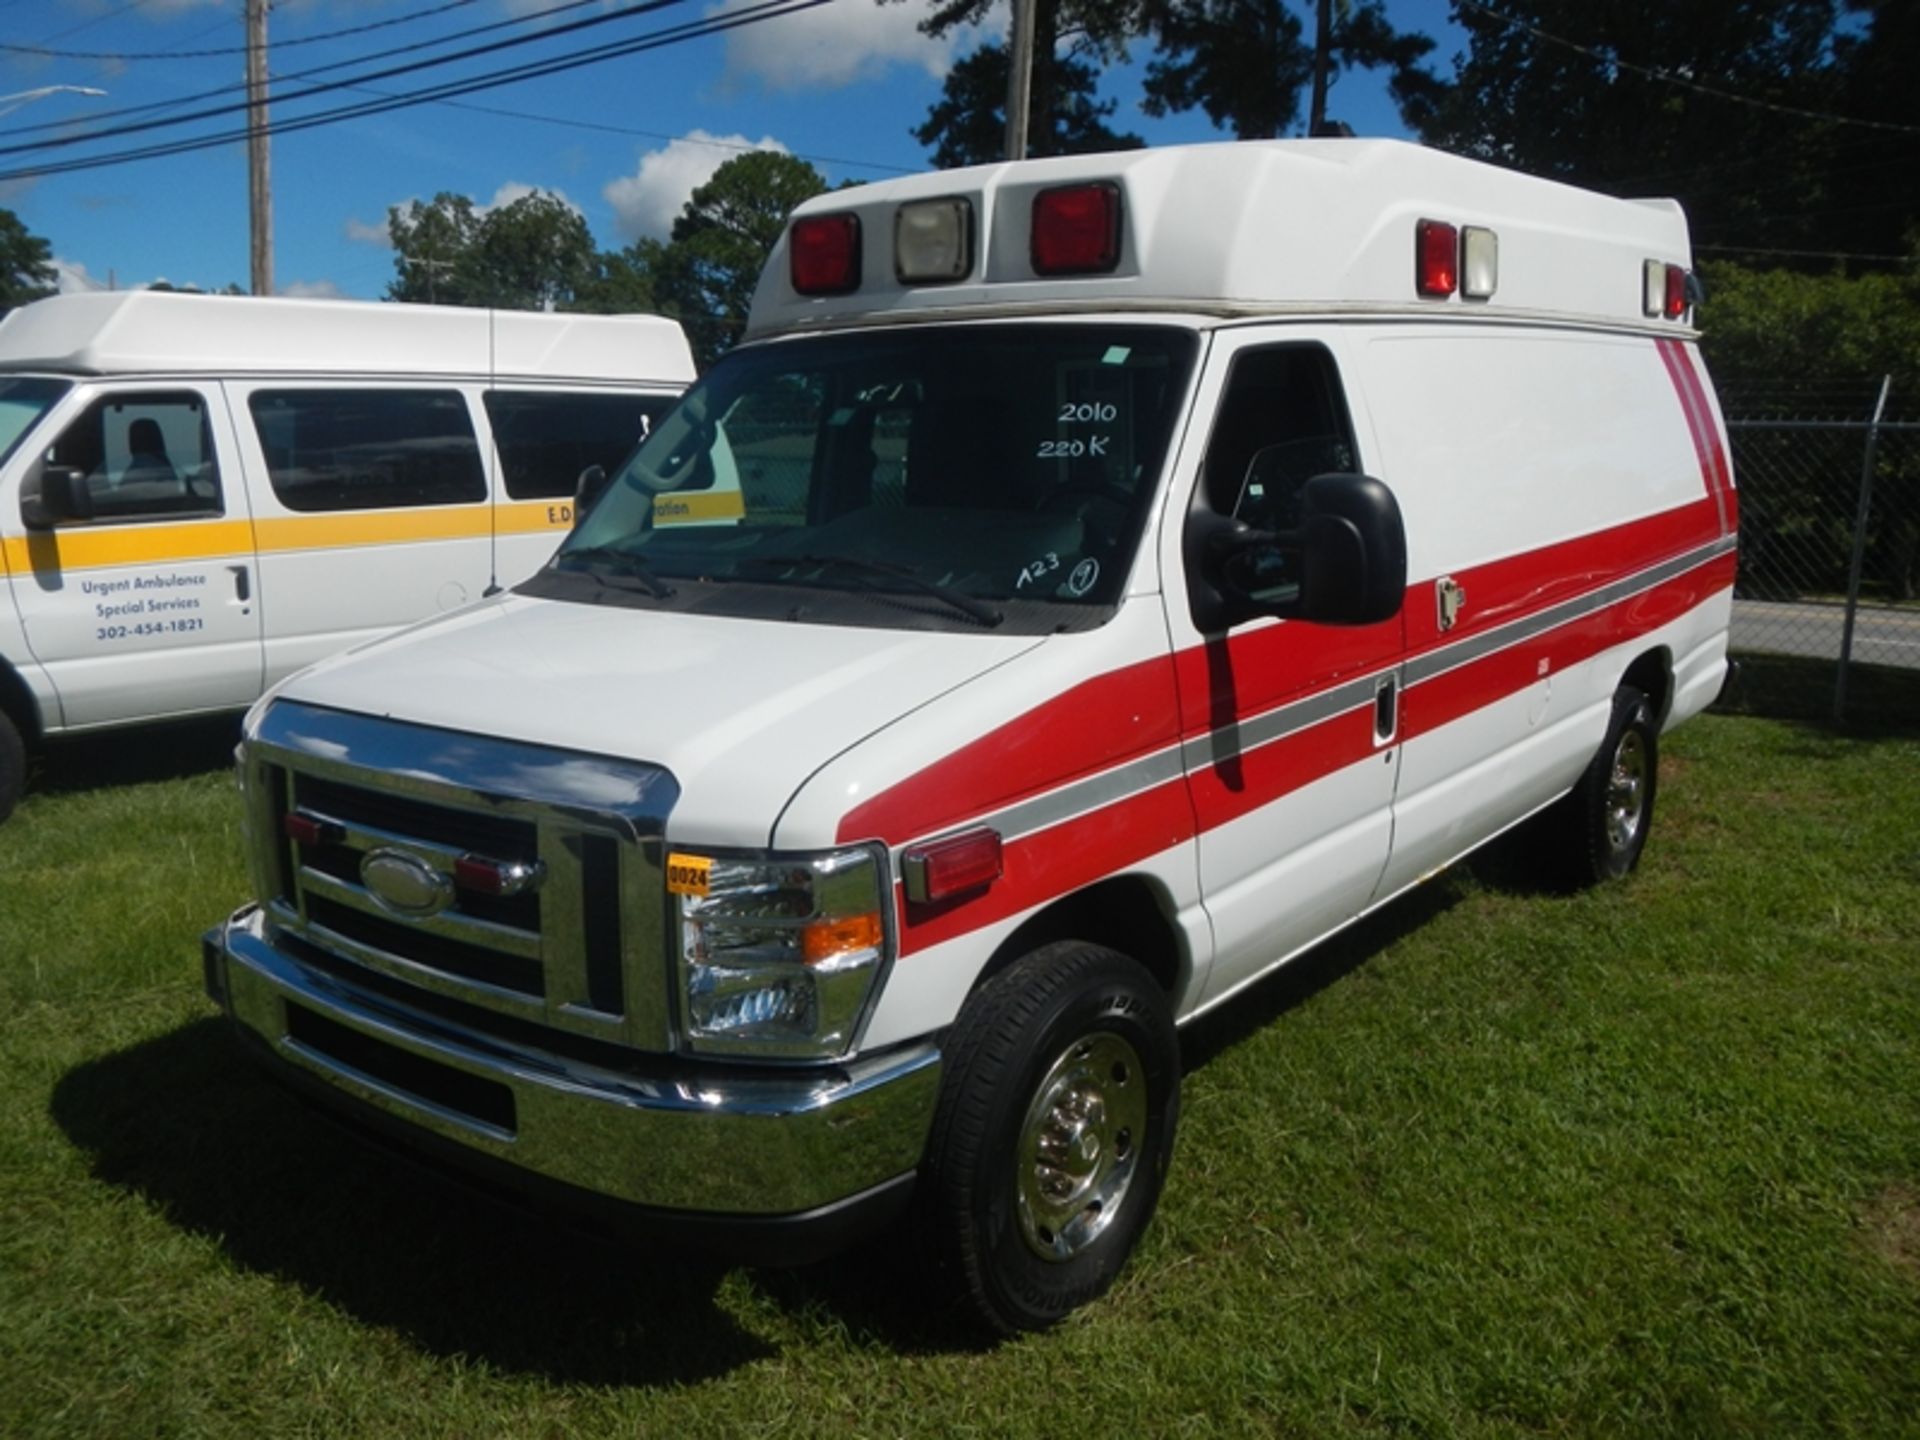 2010 Ford E350 Super Duty Type II Ambulance, dsl 220,124 miles - VIN: 1FDSS3EP6ADA41944